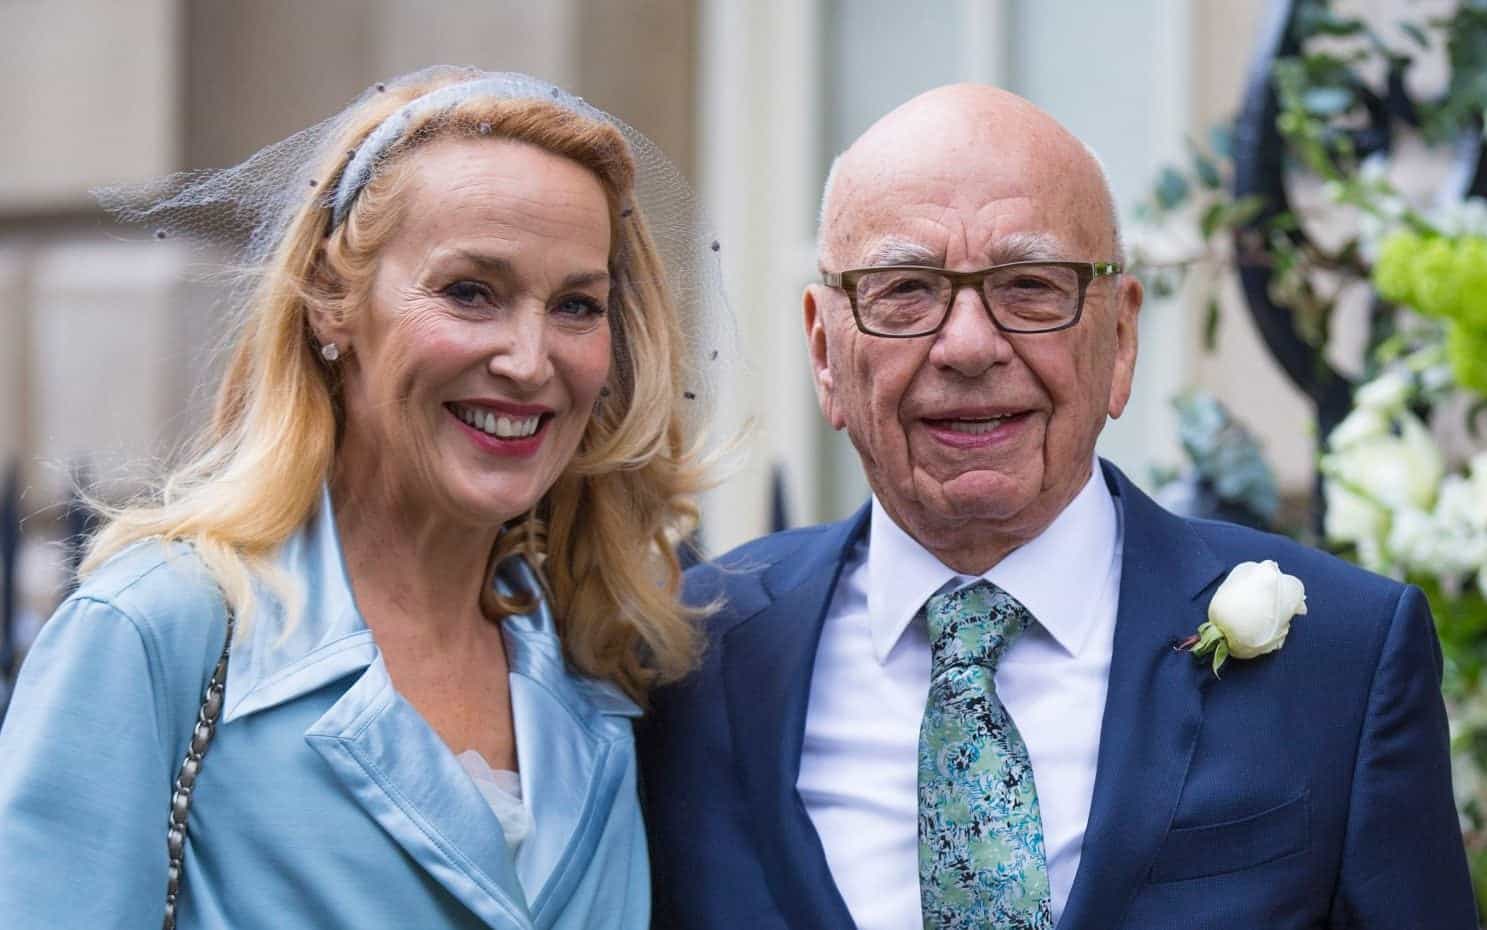 Rupert Murdoch and Jerry Hall (Credits: The Telegraph)